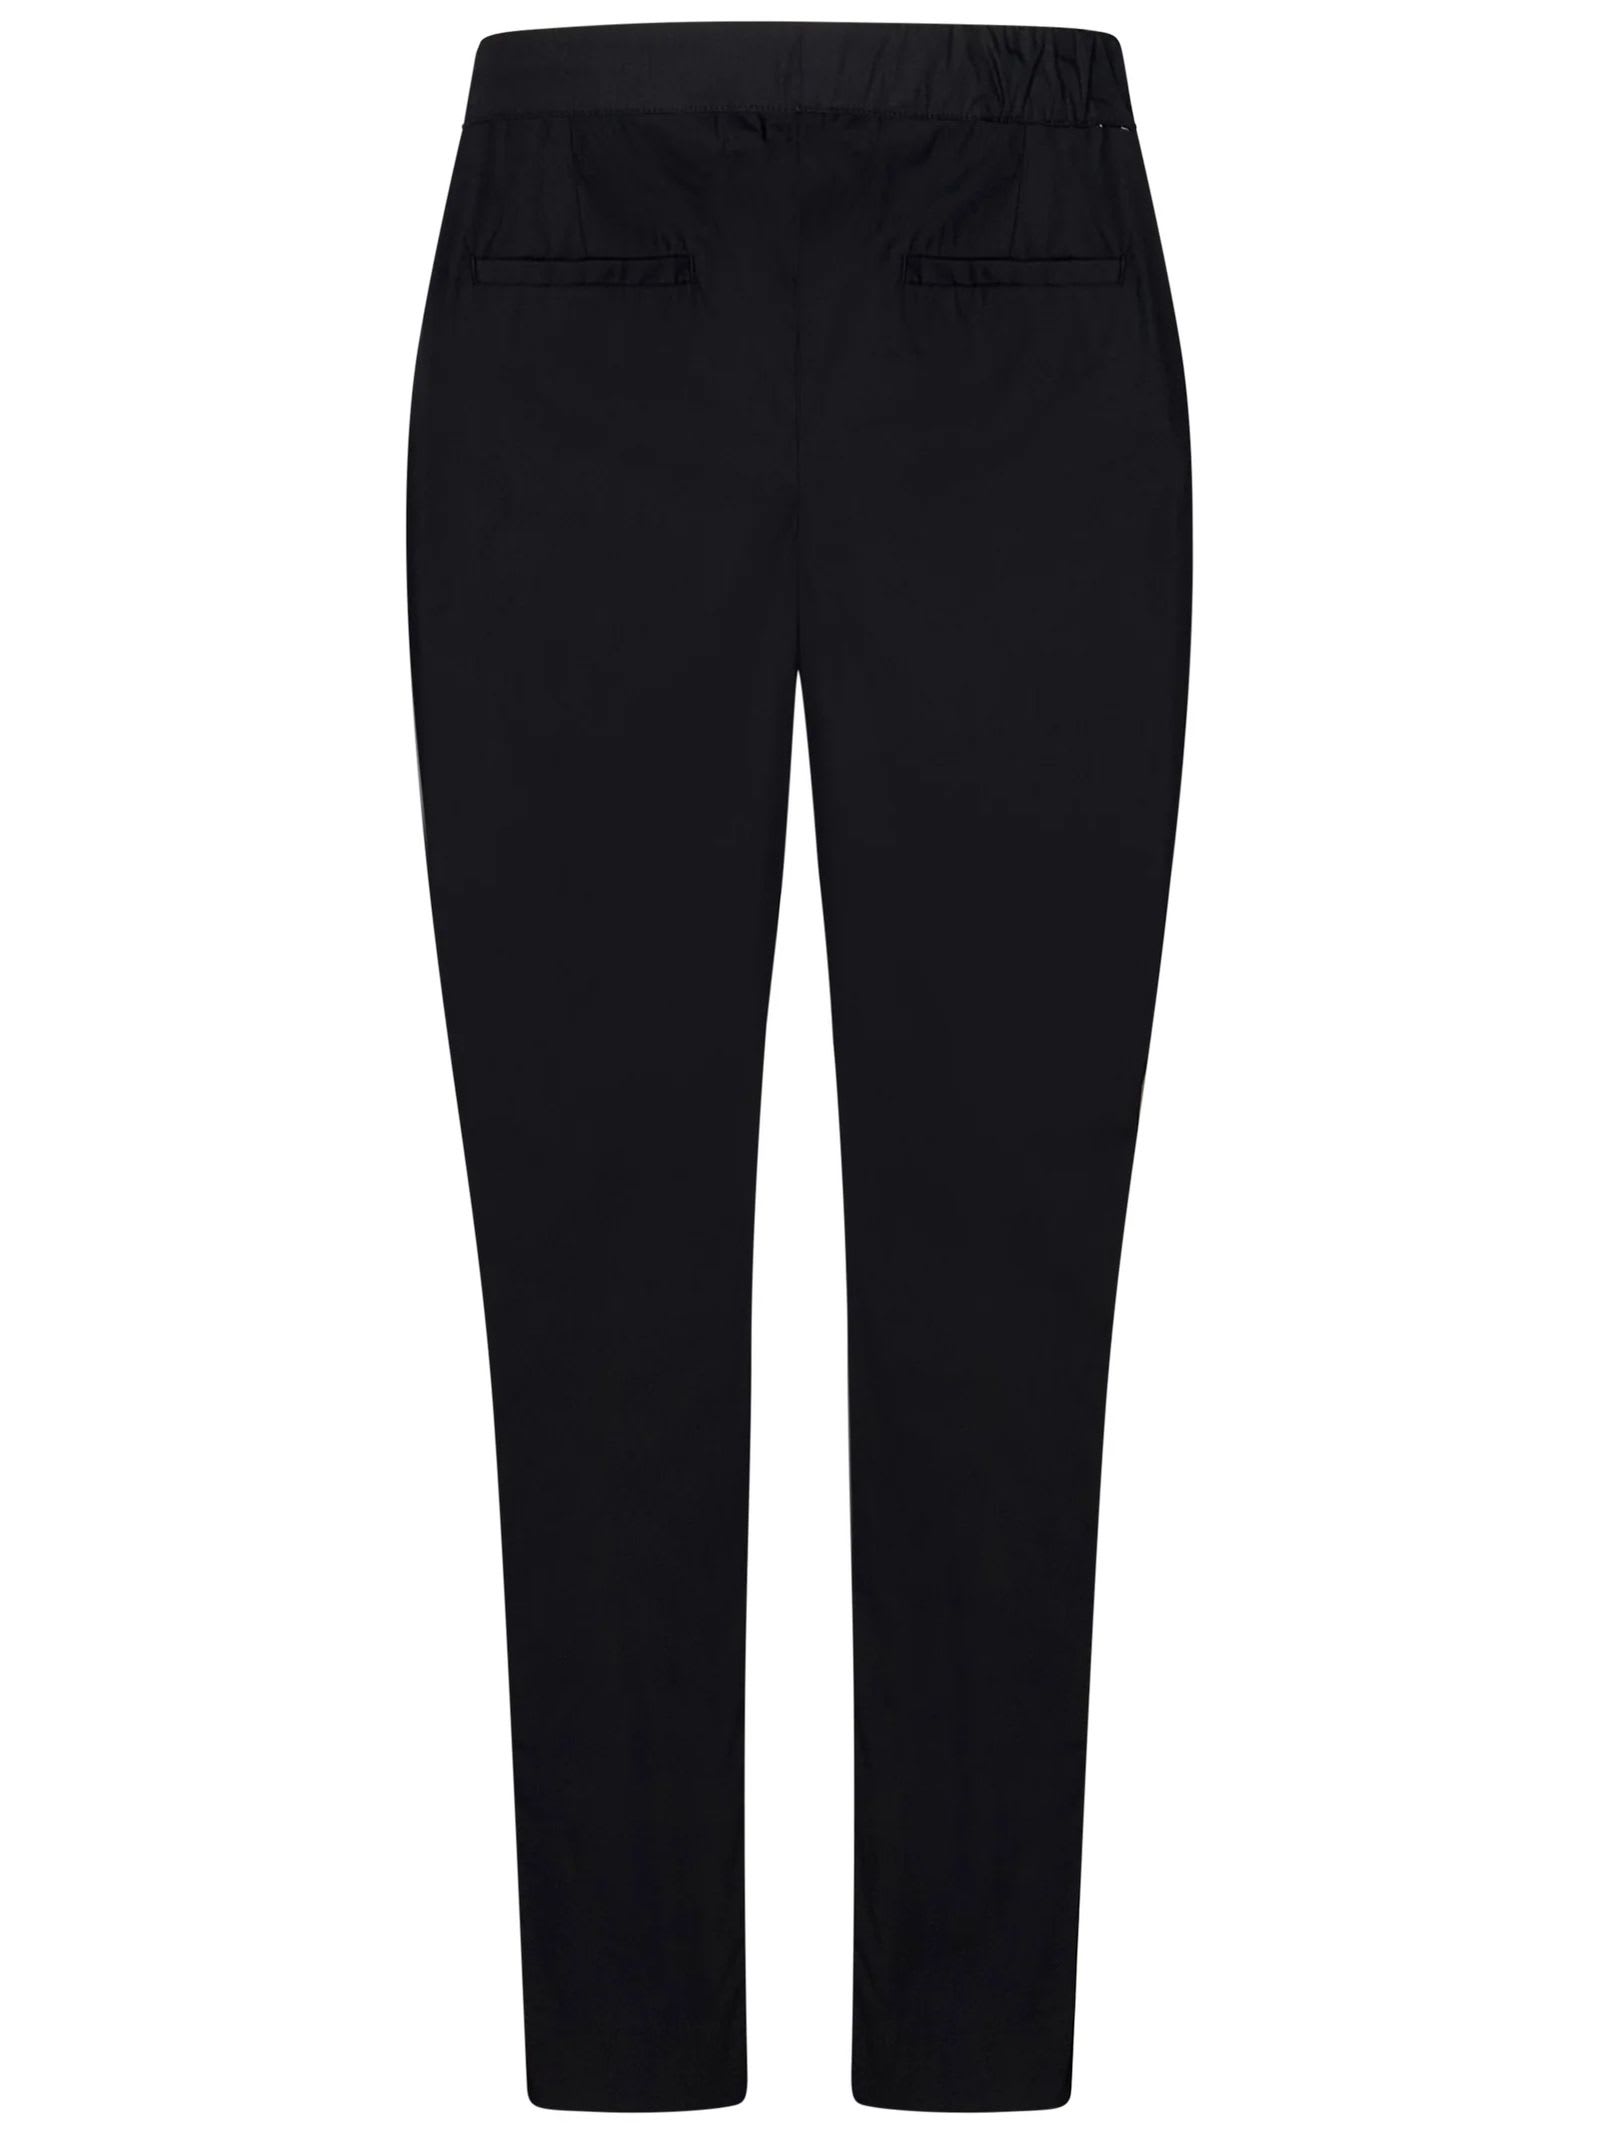 Shop Low Brand Trousers Black